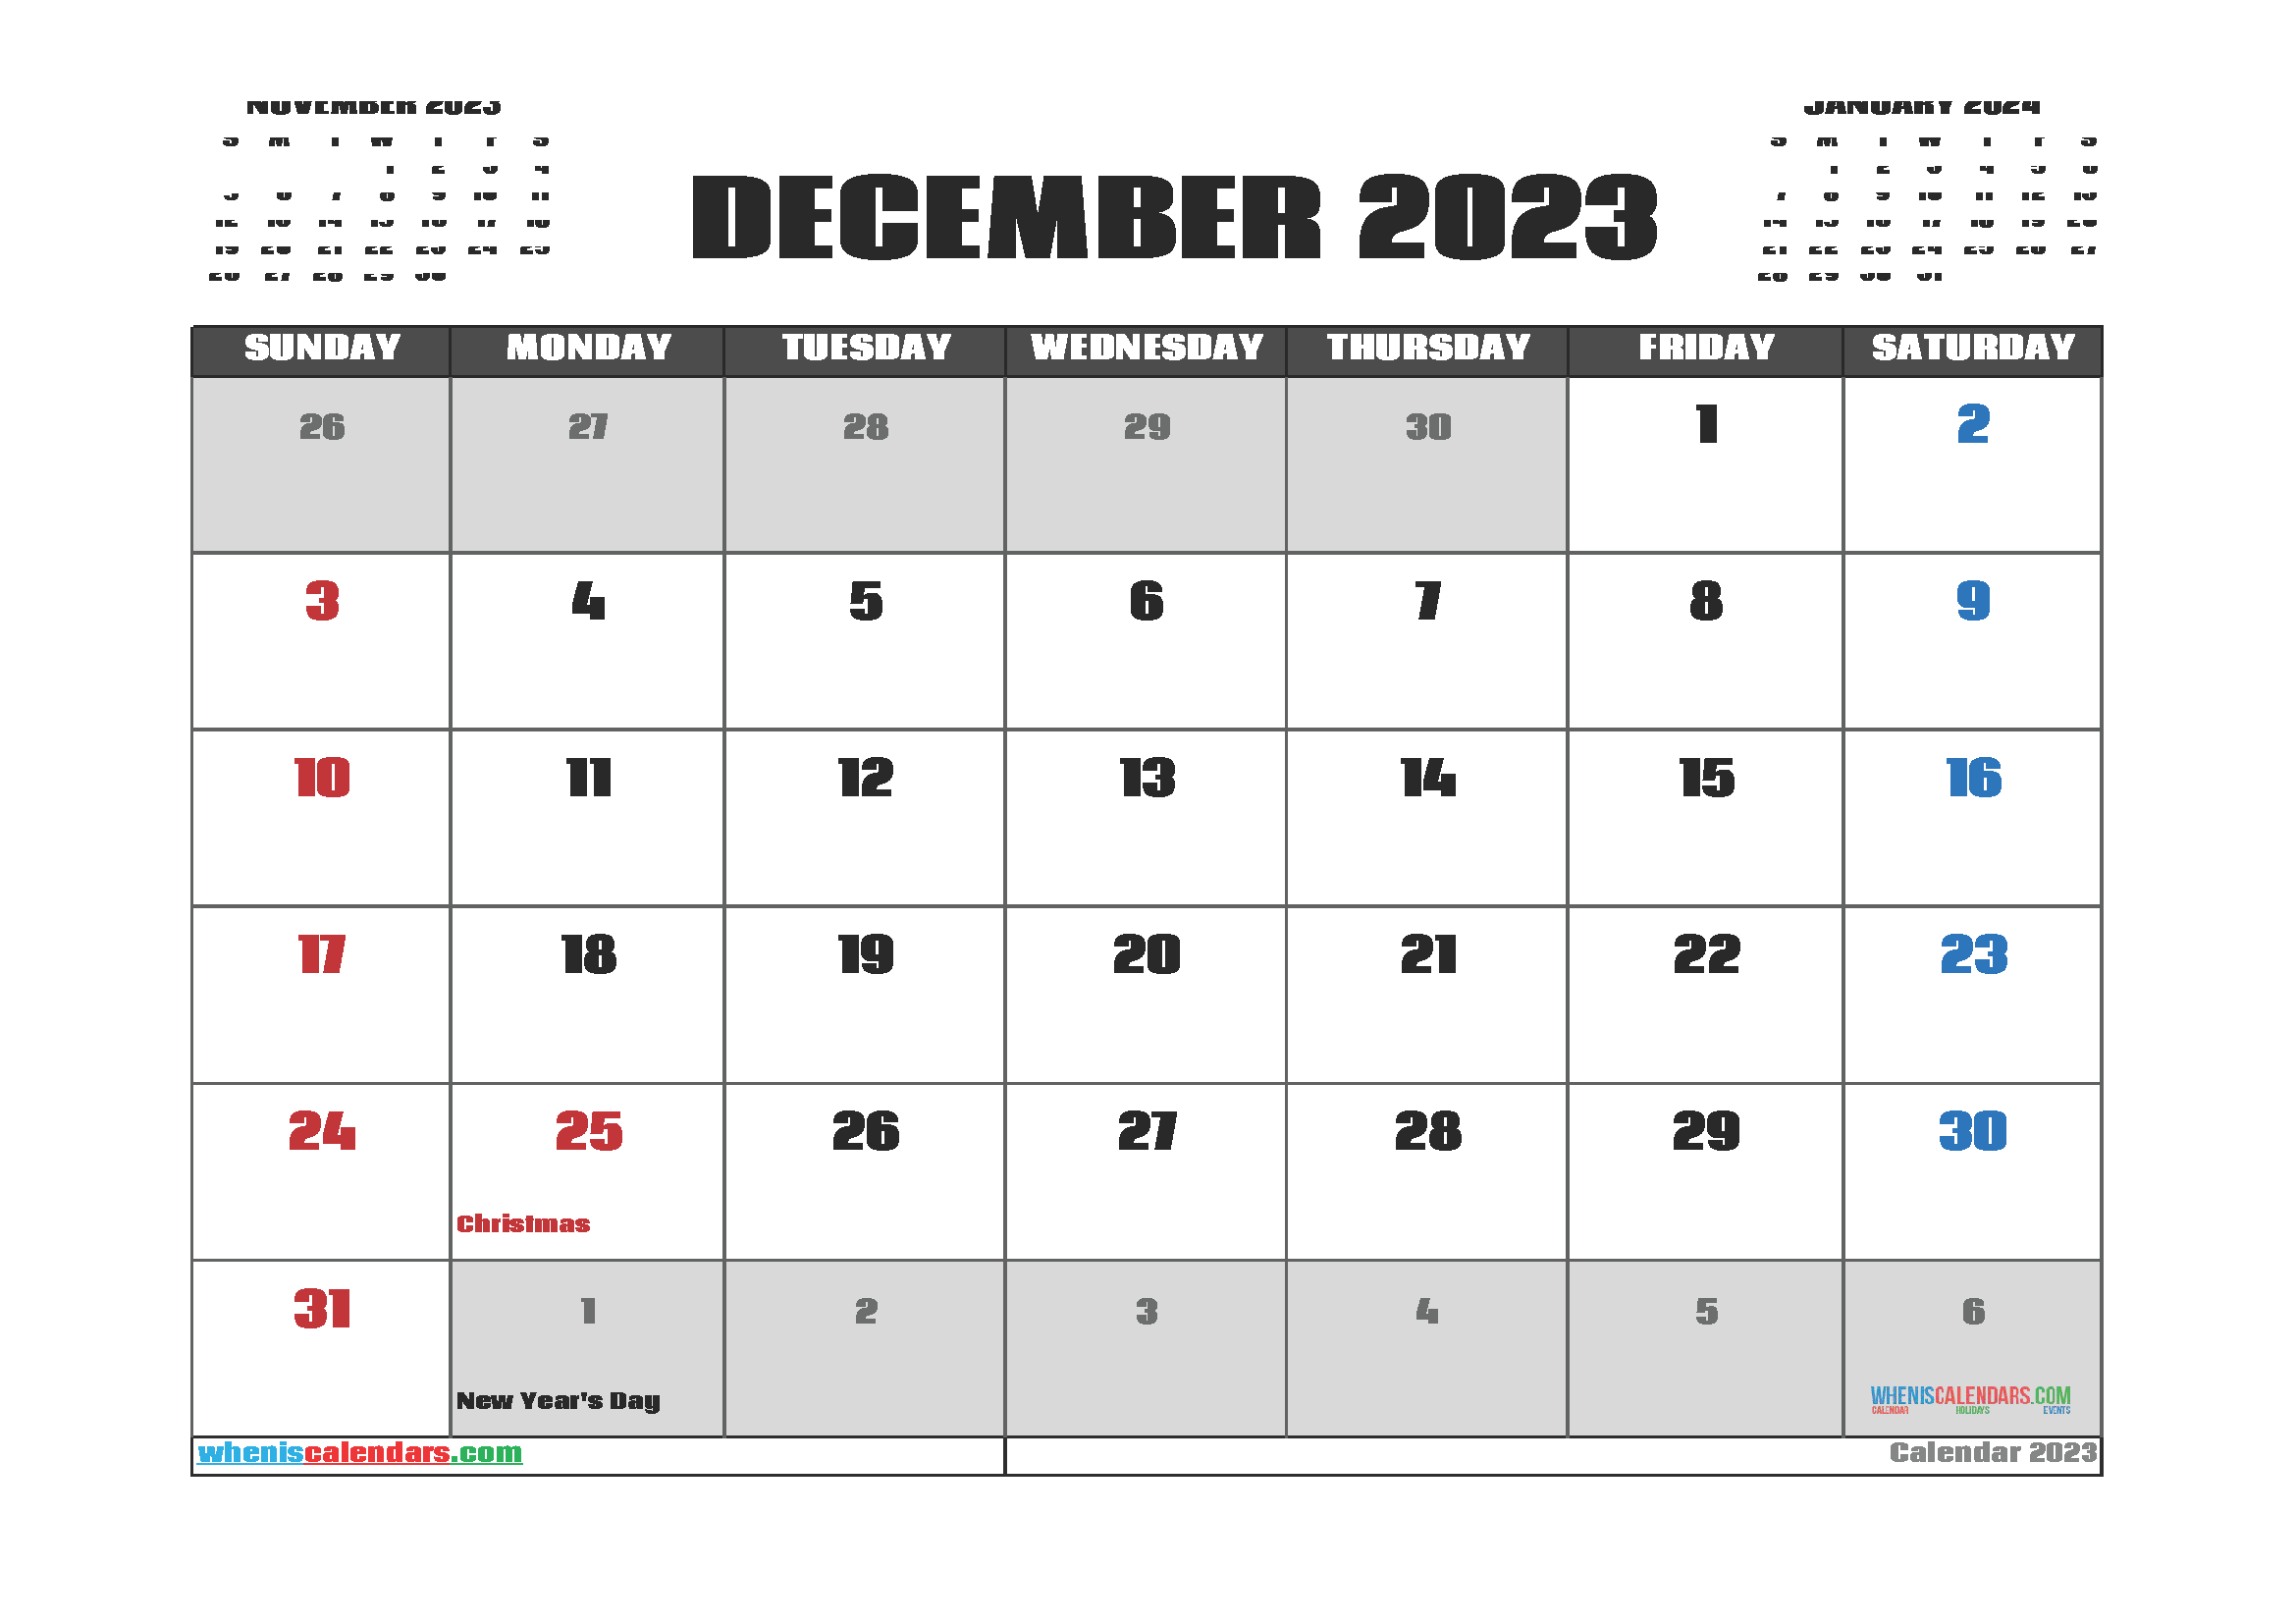 nsu-winter-2023-calendar-customize-and-print